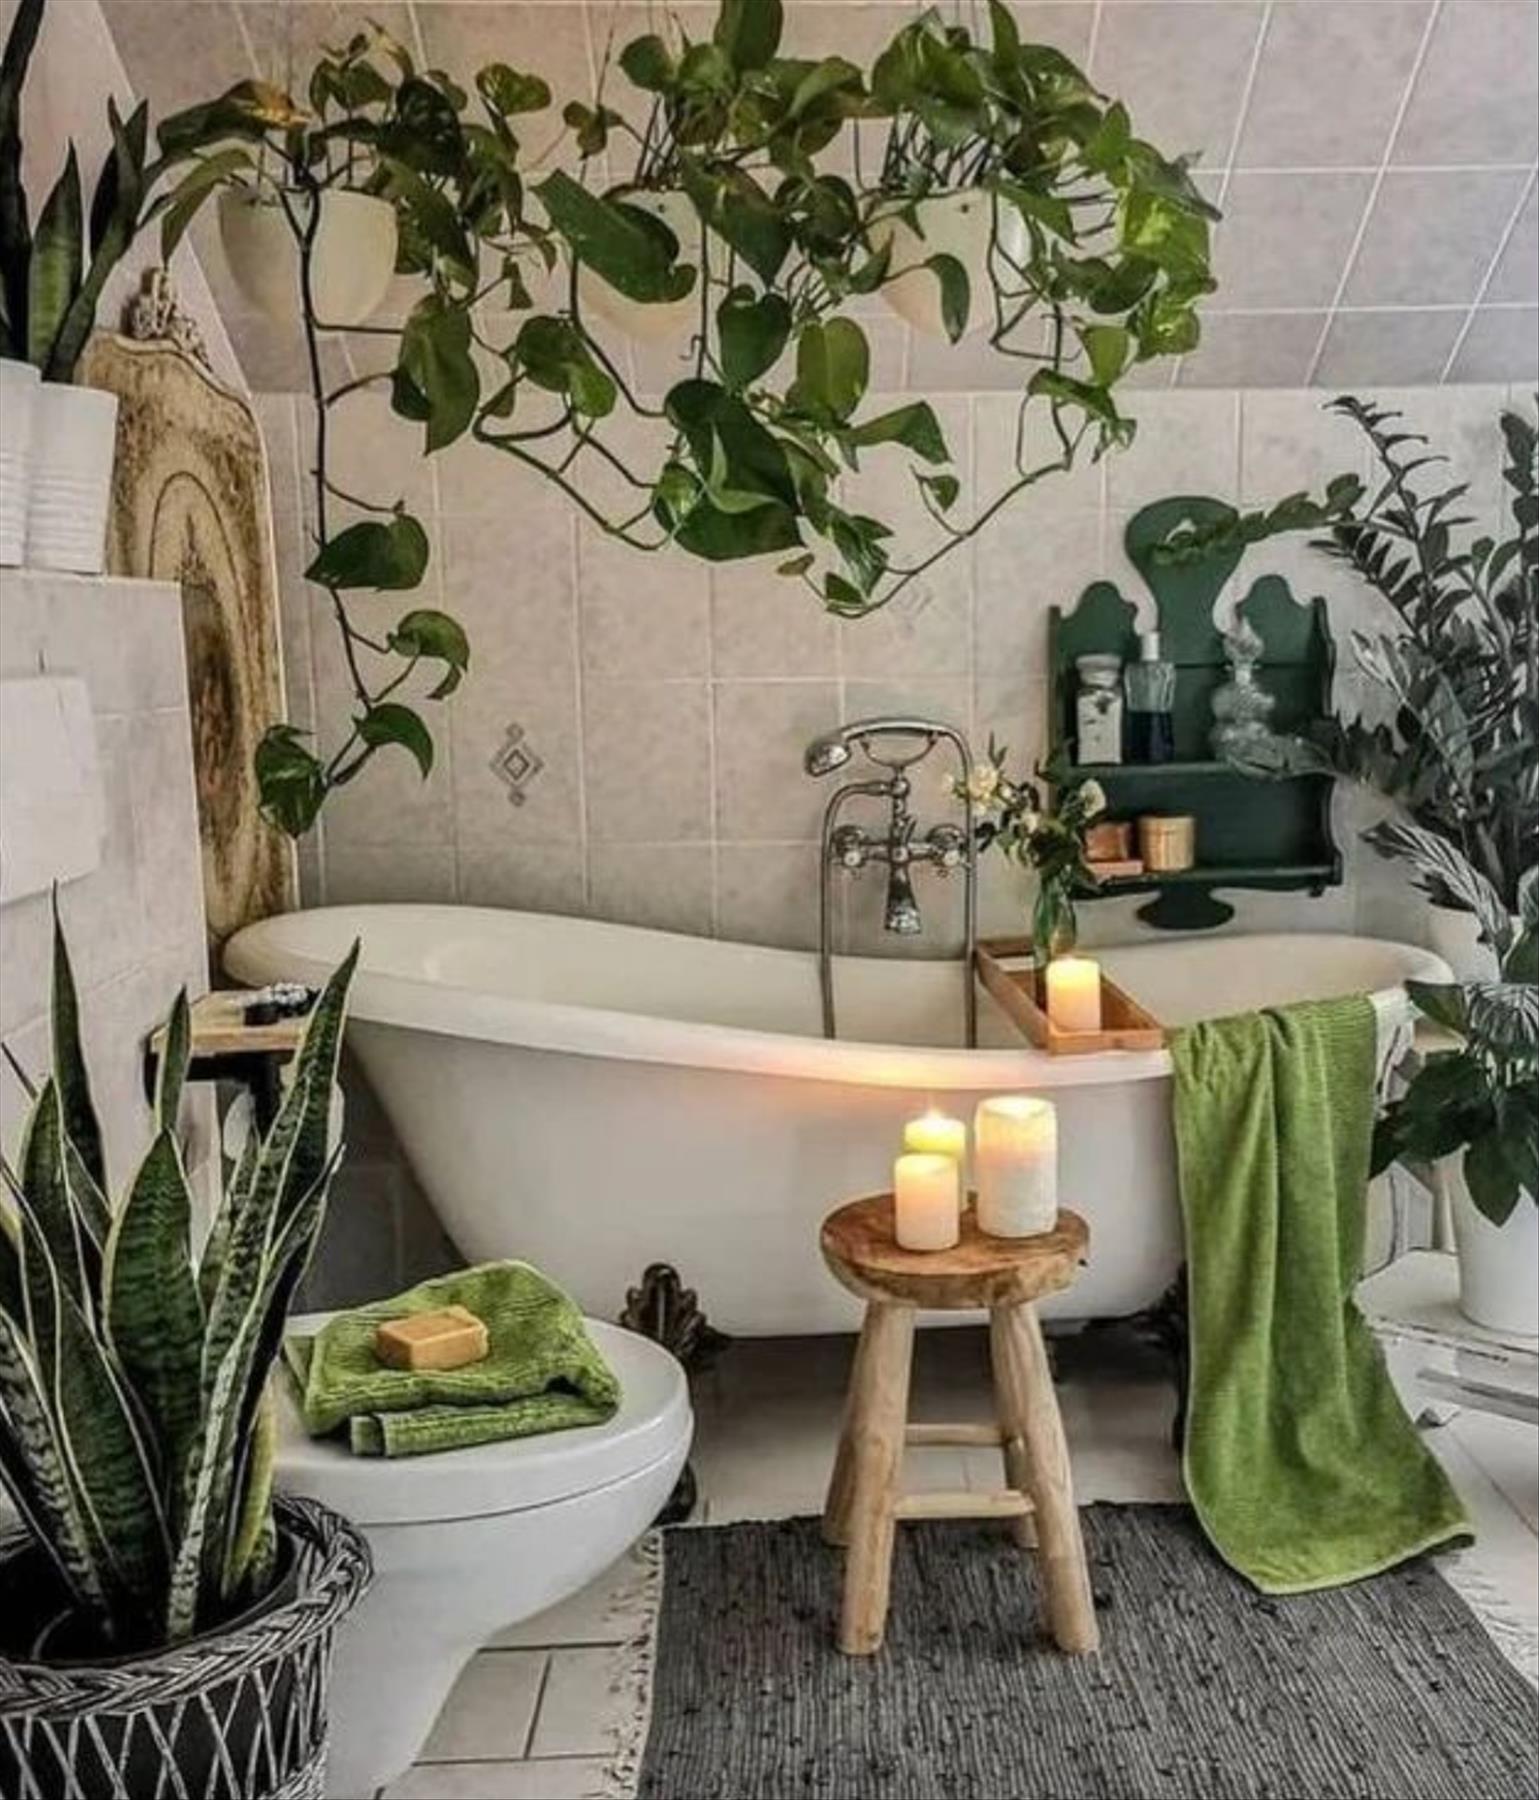 Chic boho style bathroom decor ideas to get inspired